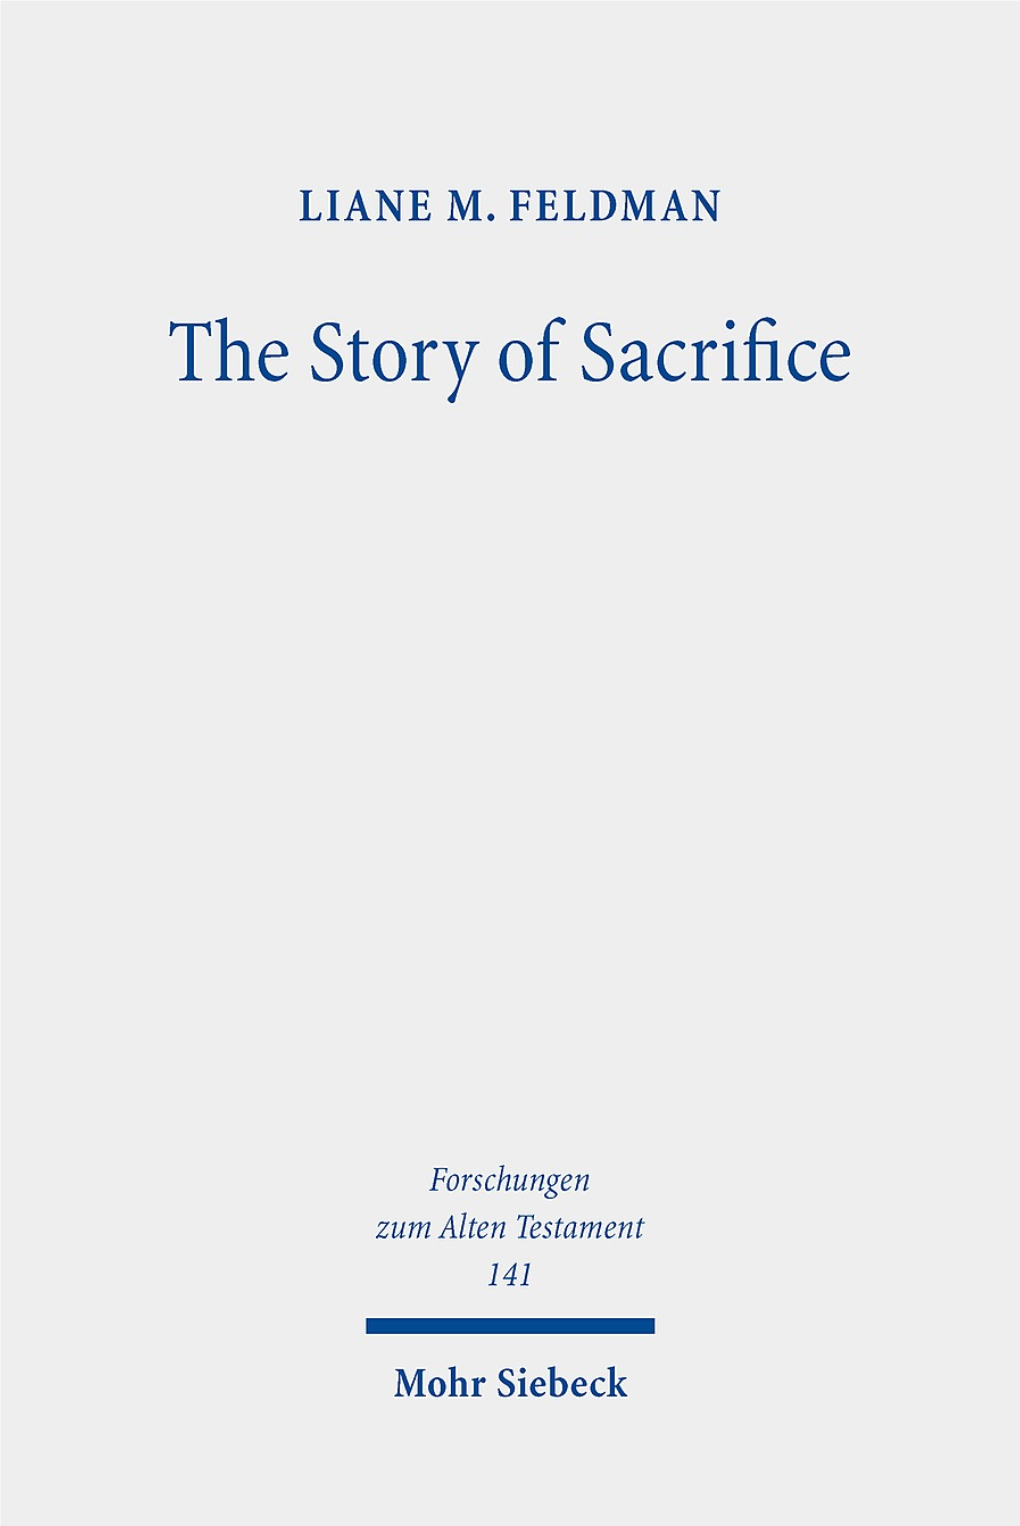 The Story of Sacrifice